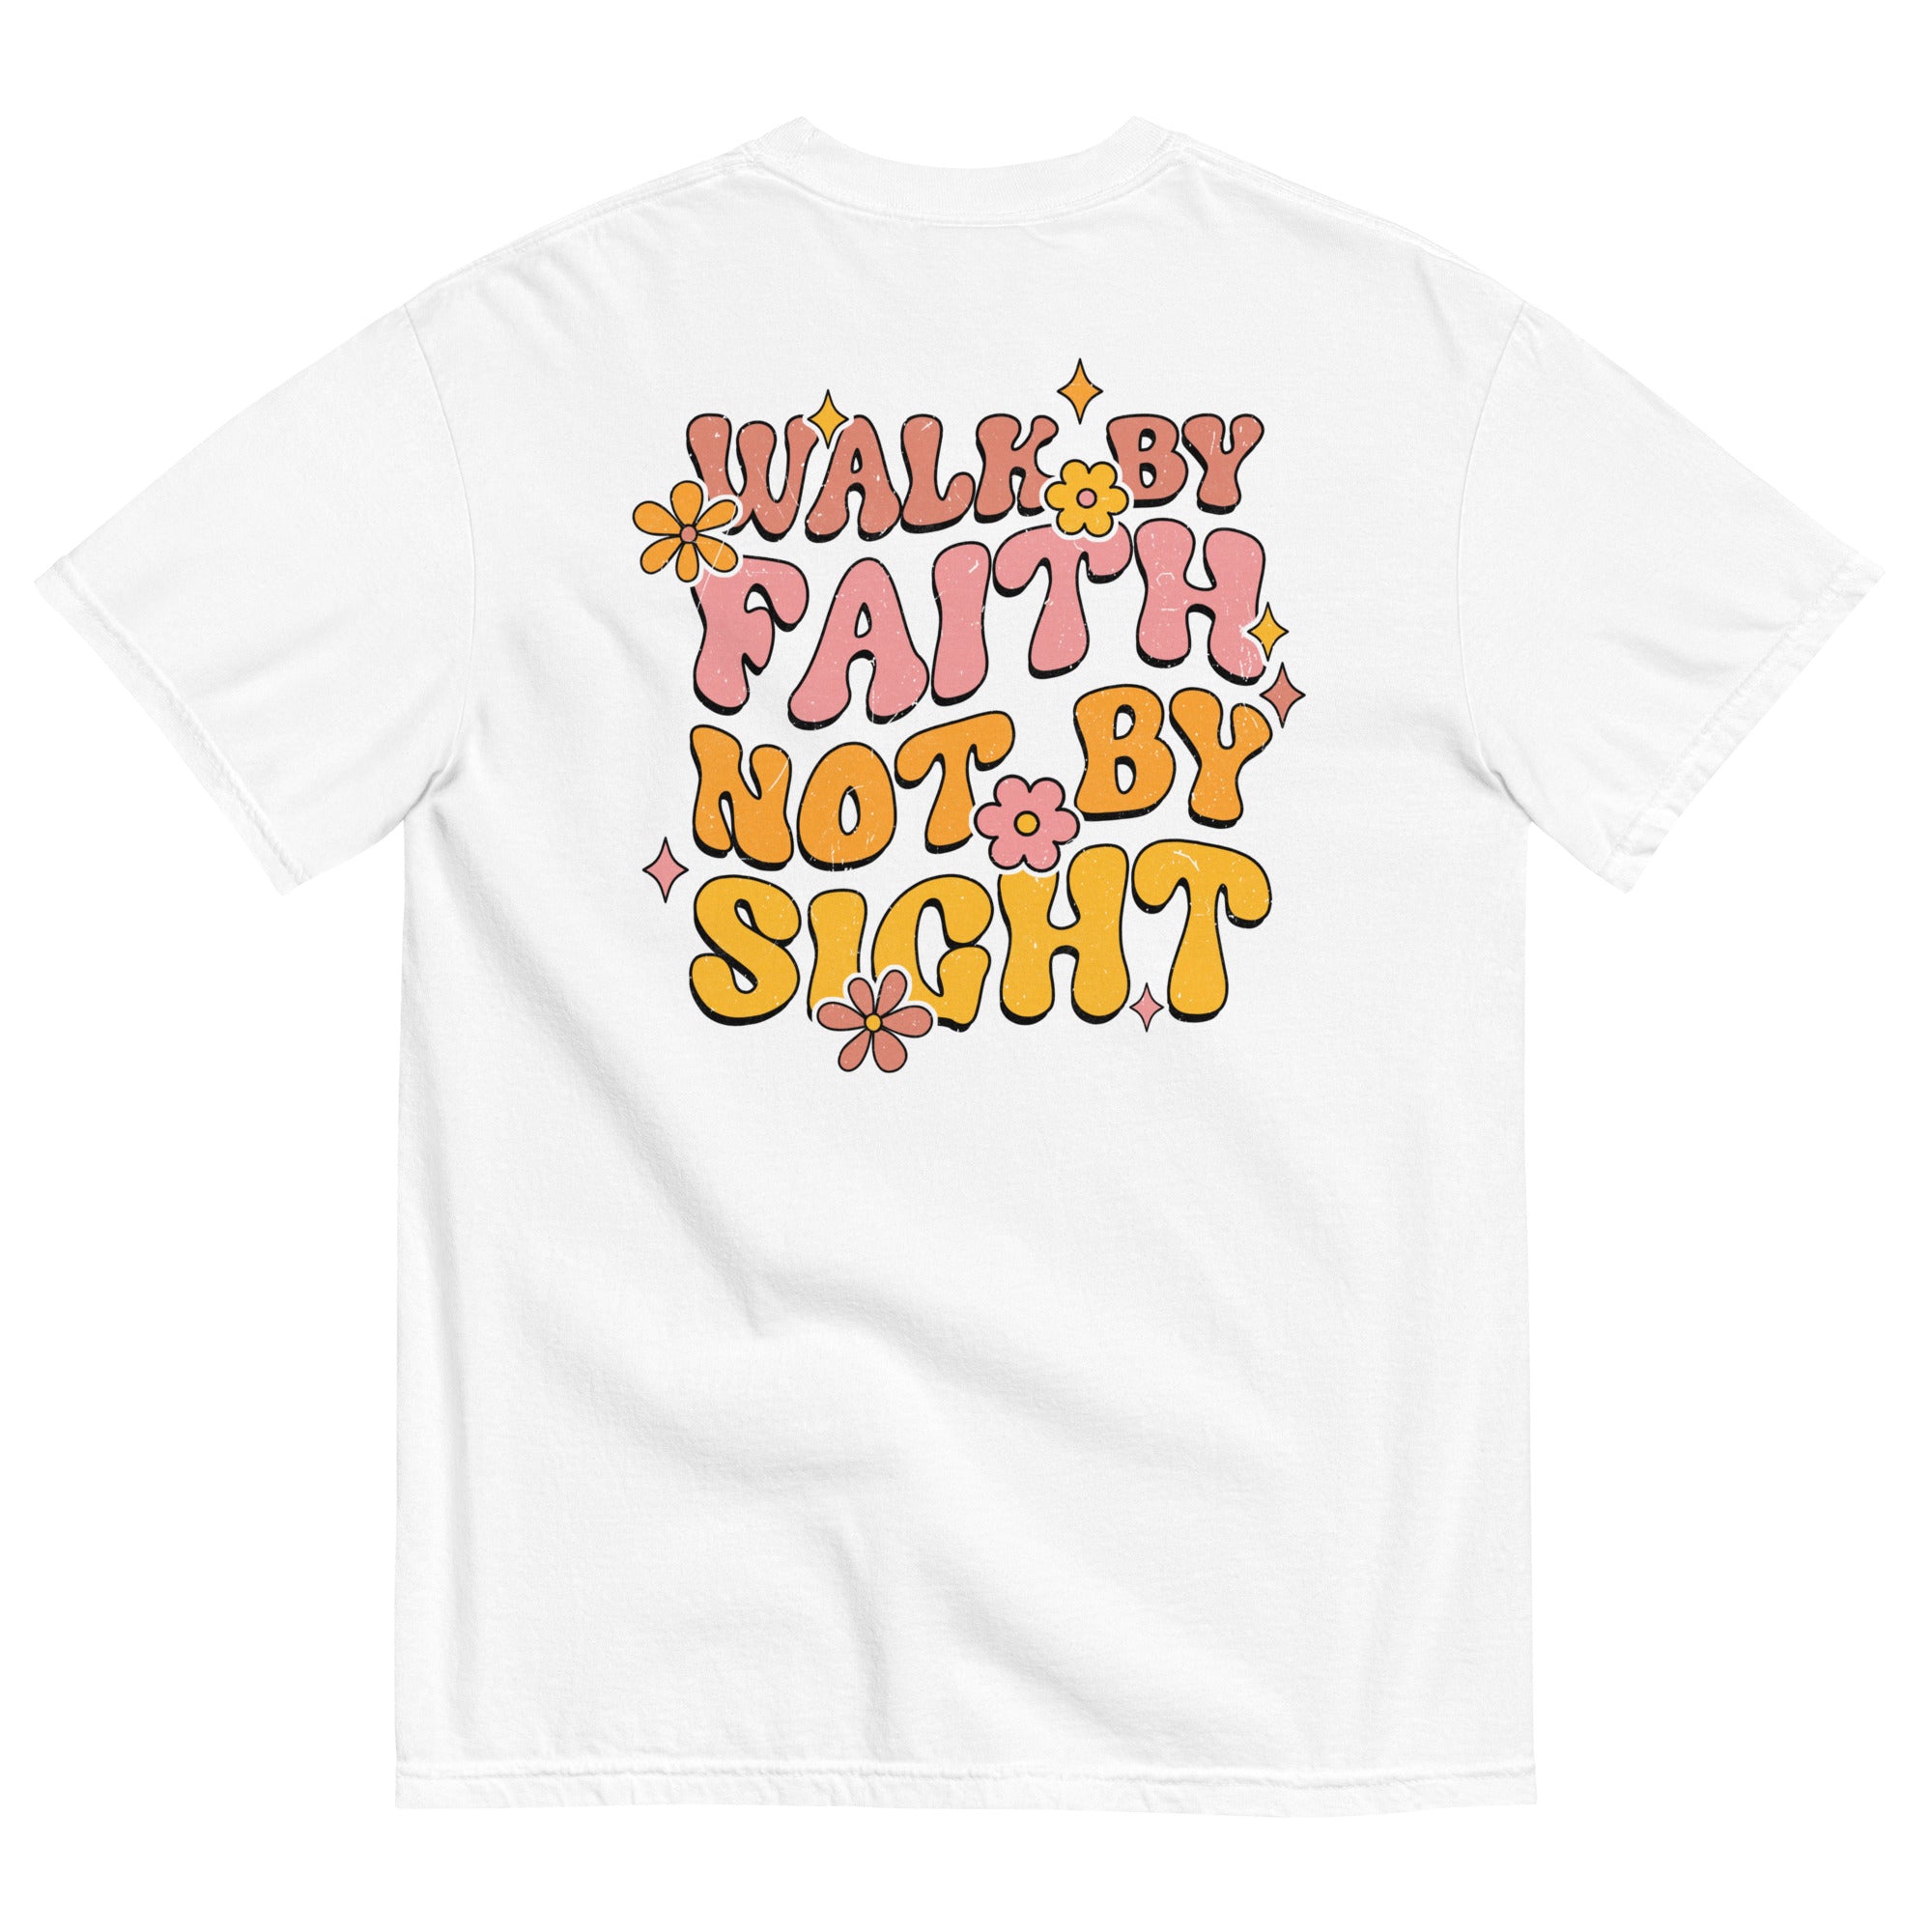 Walk By Faith T-Shirt